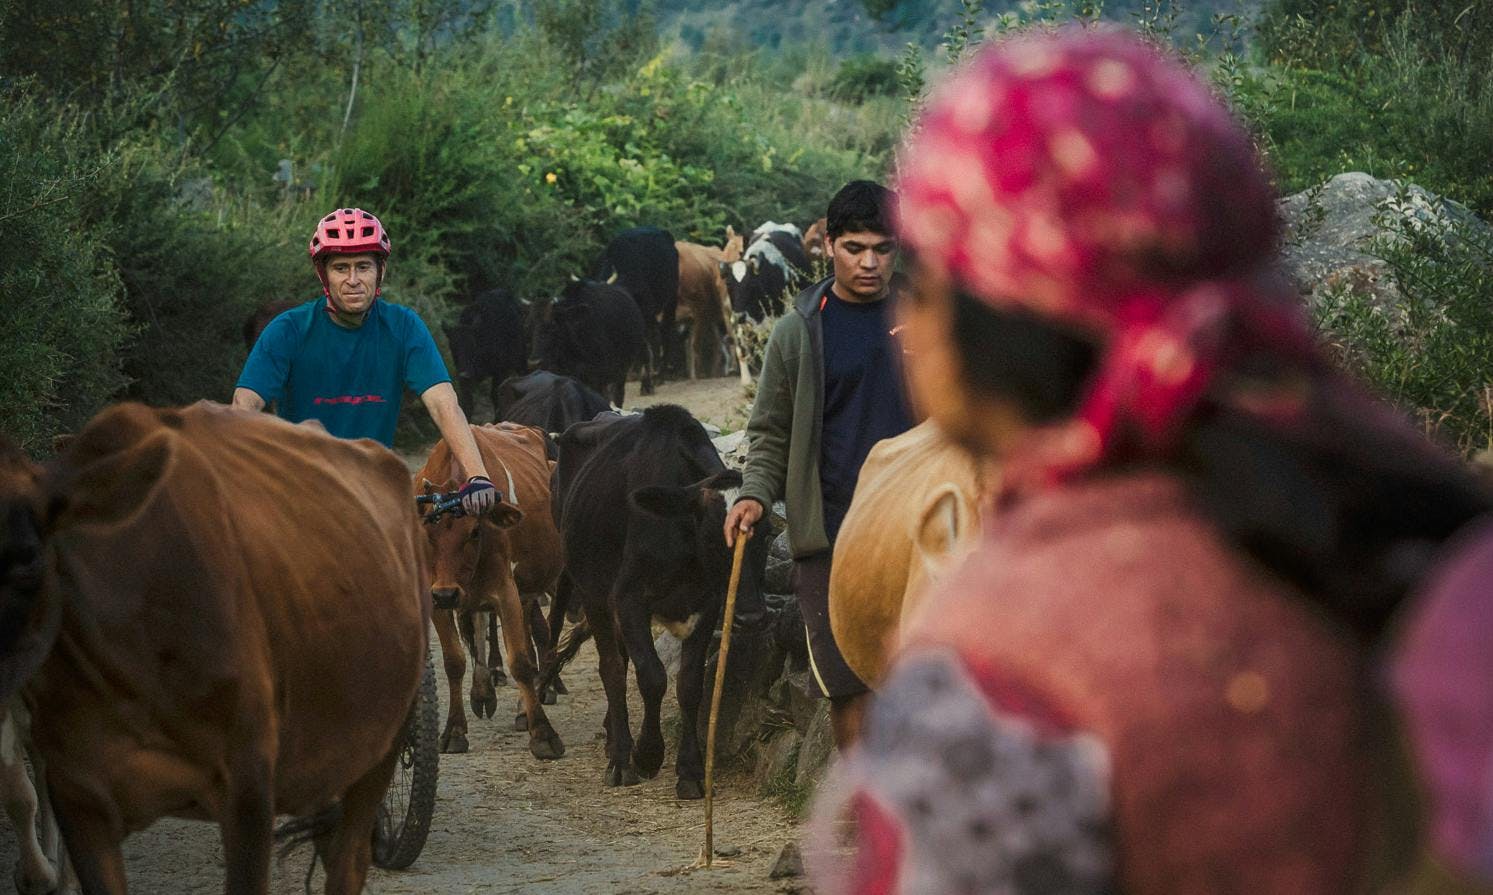 mountain biking past cows in India